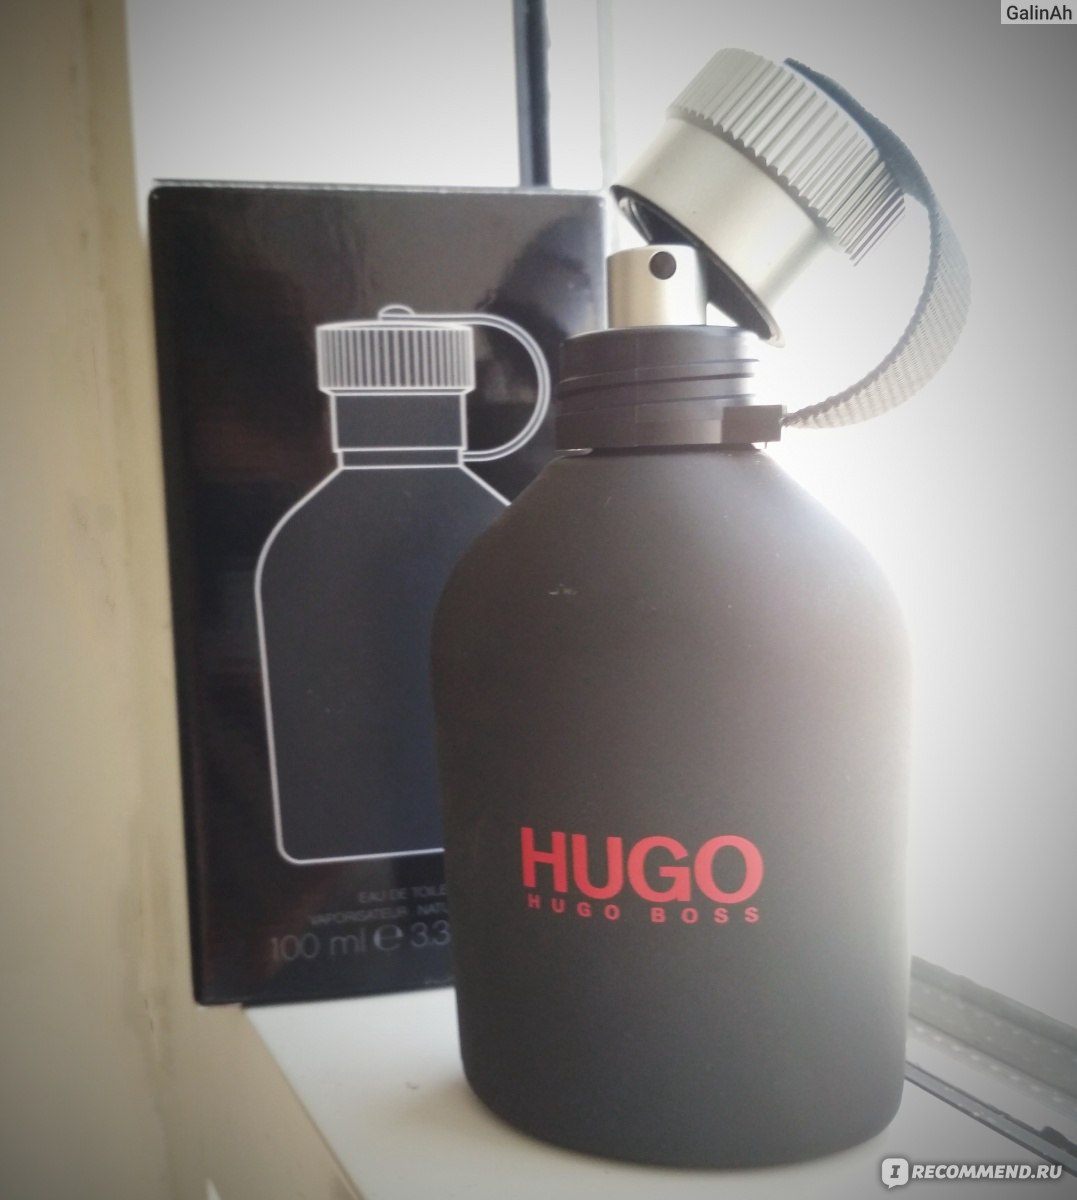 Hugo different. Хуго дифферент. Hugo Boss just different магнит Косметик. Летуаль Hugo Boss just different. Хуго туал вода.